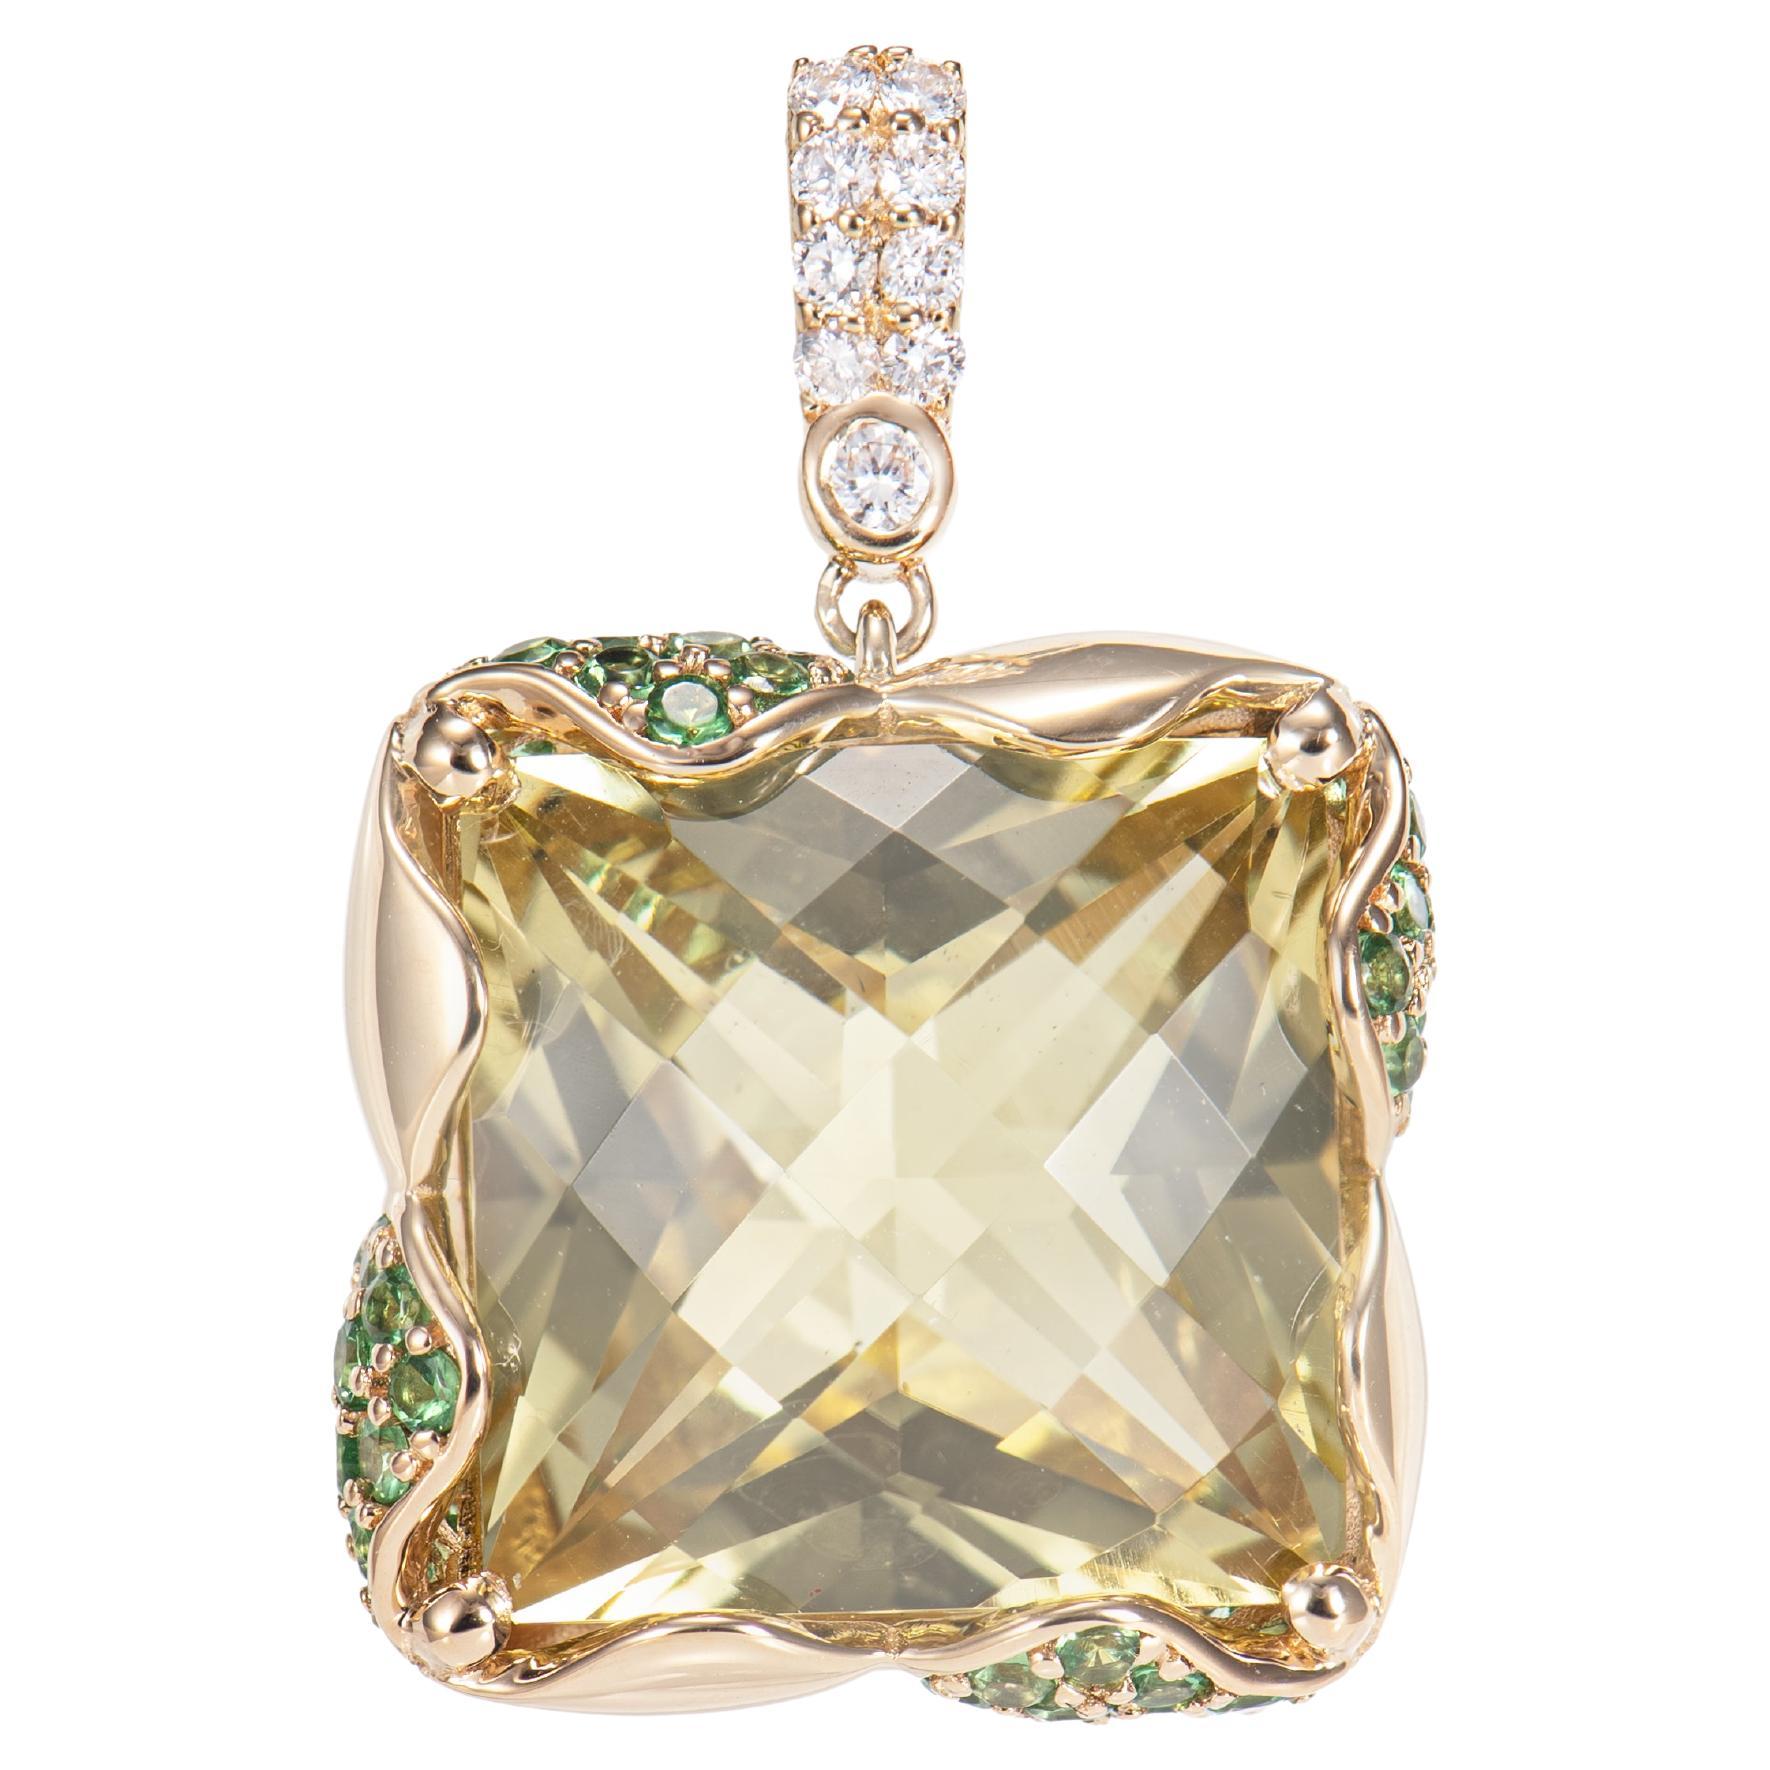 Pendentif en quartz citron de 13,62 carats en or 18 carats avec tsavorite et diamant blanc.